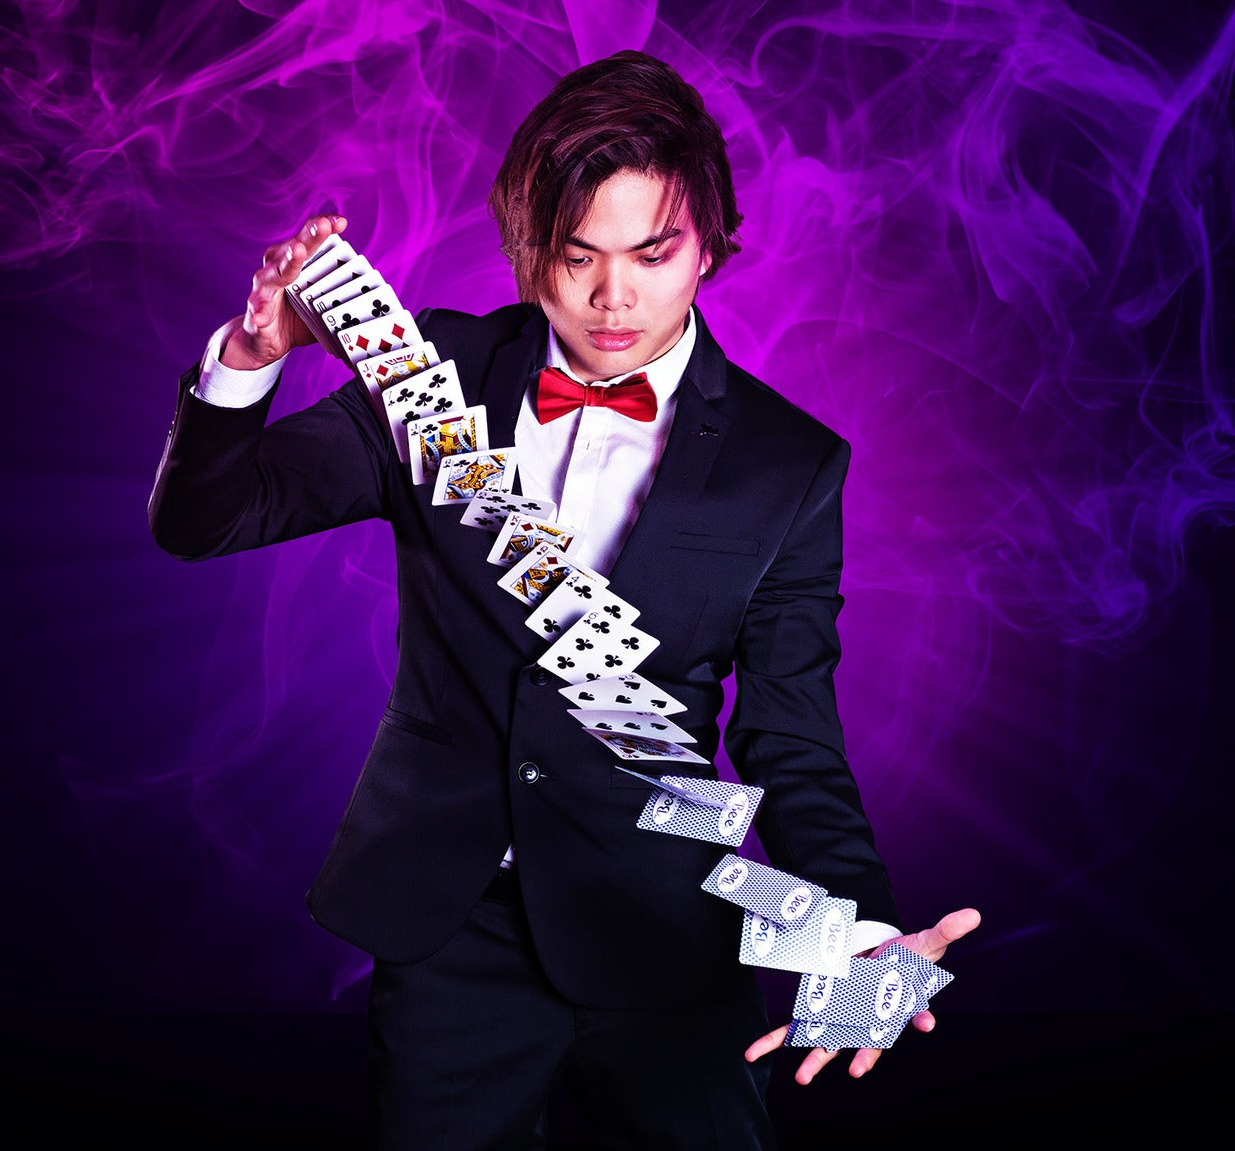 Vegas show review - Shin Lim Limitless - Best magic show? 